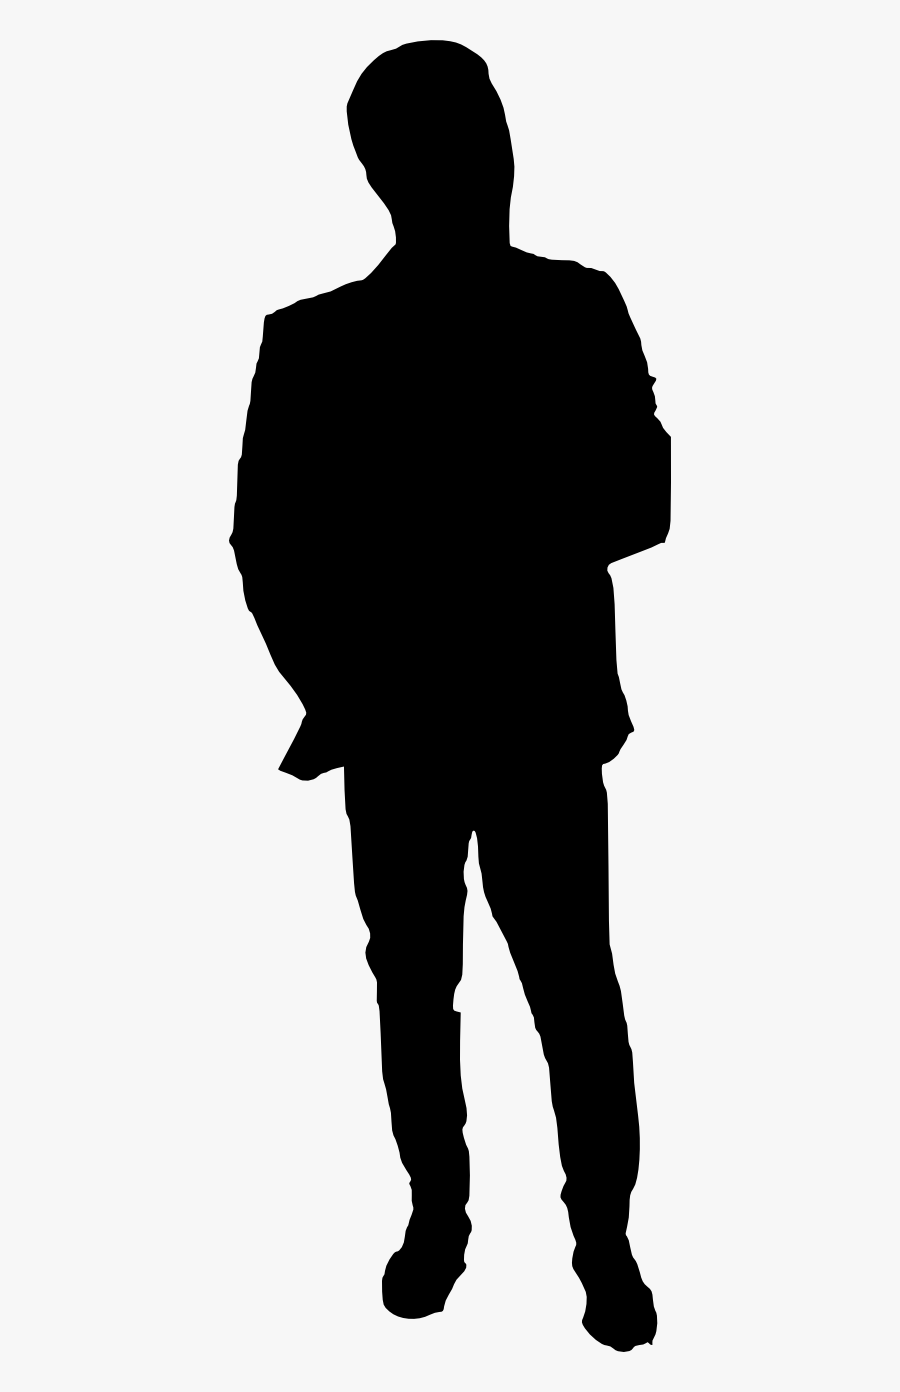 20 Man Silhouette - Transparent Background Human Silhouette Png, Transparent Clipart